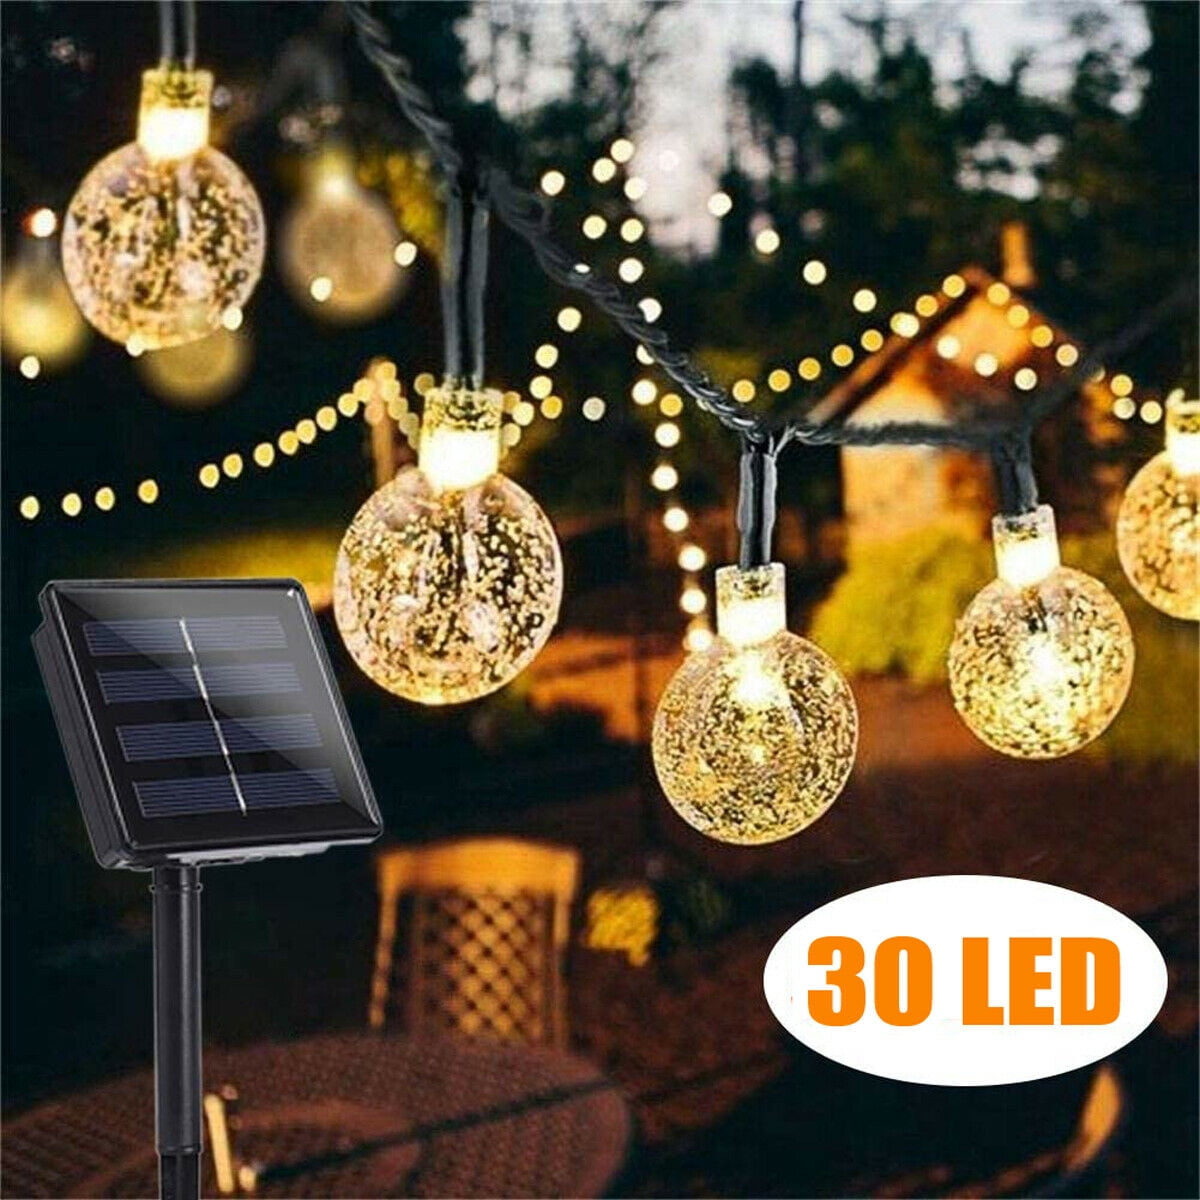 Solar Powered 30 LED String Light Garden Path Yard Decor Lamp Outdoor Waterproof 